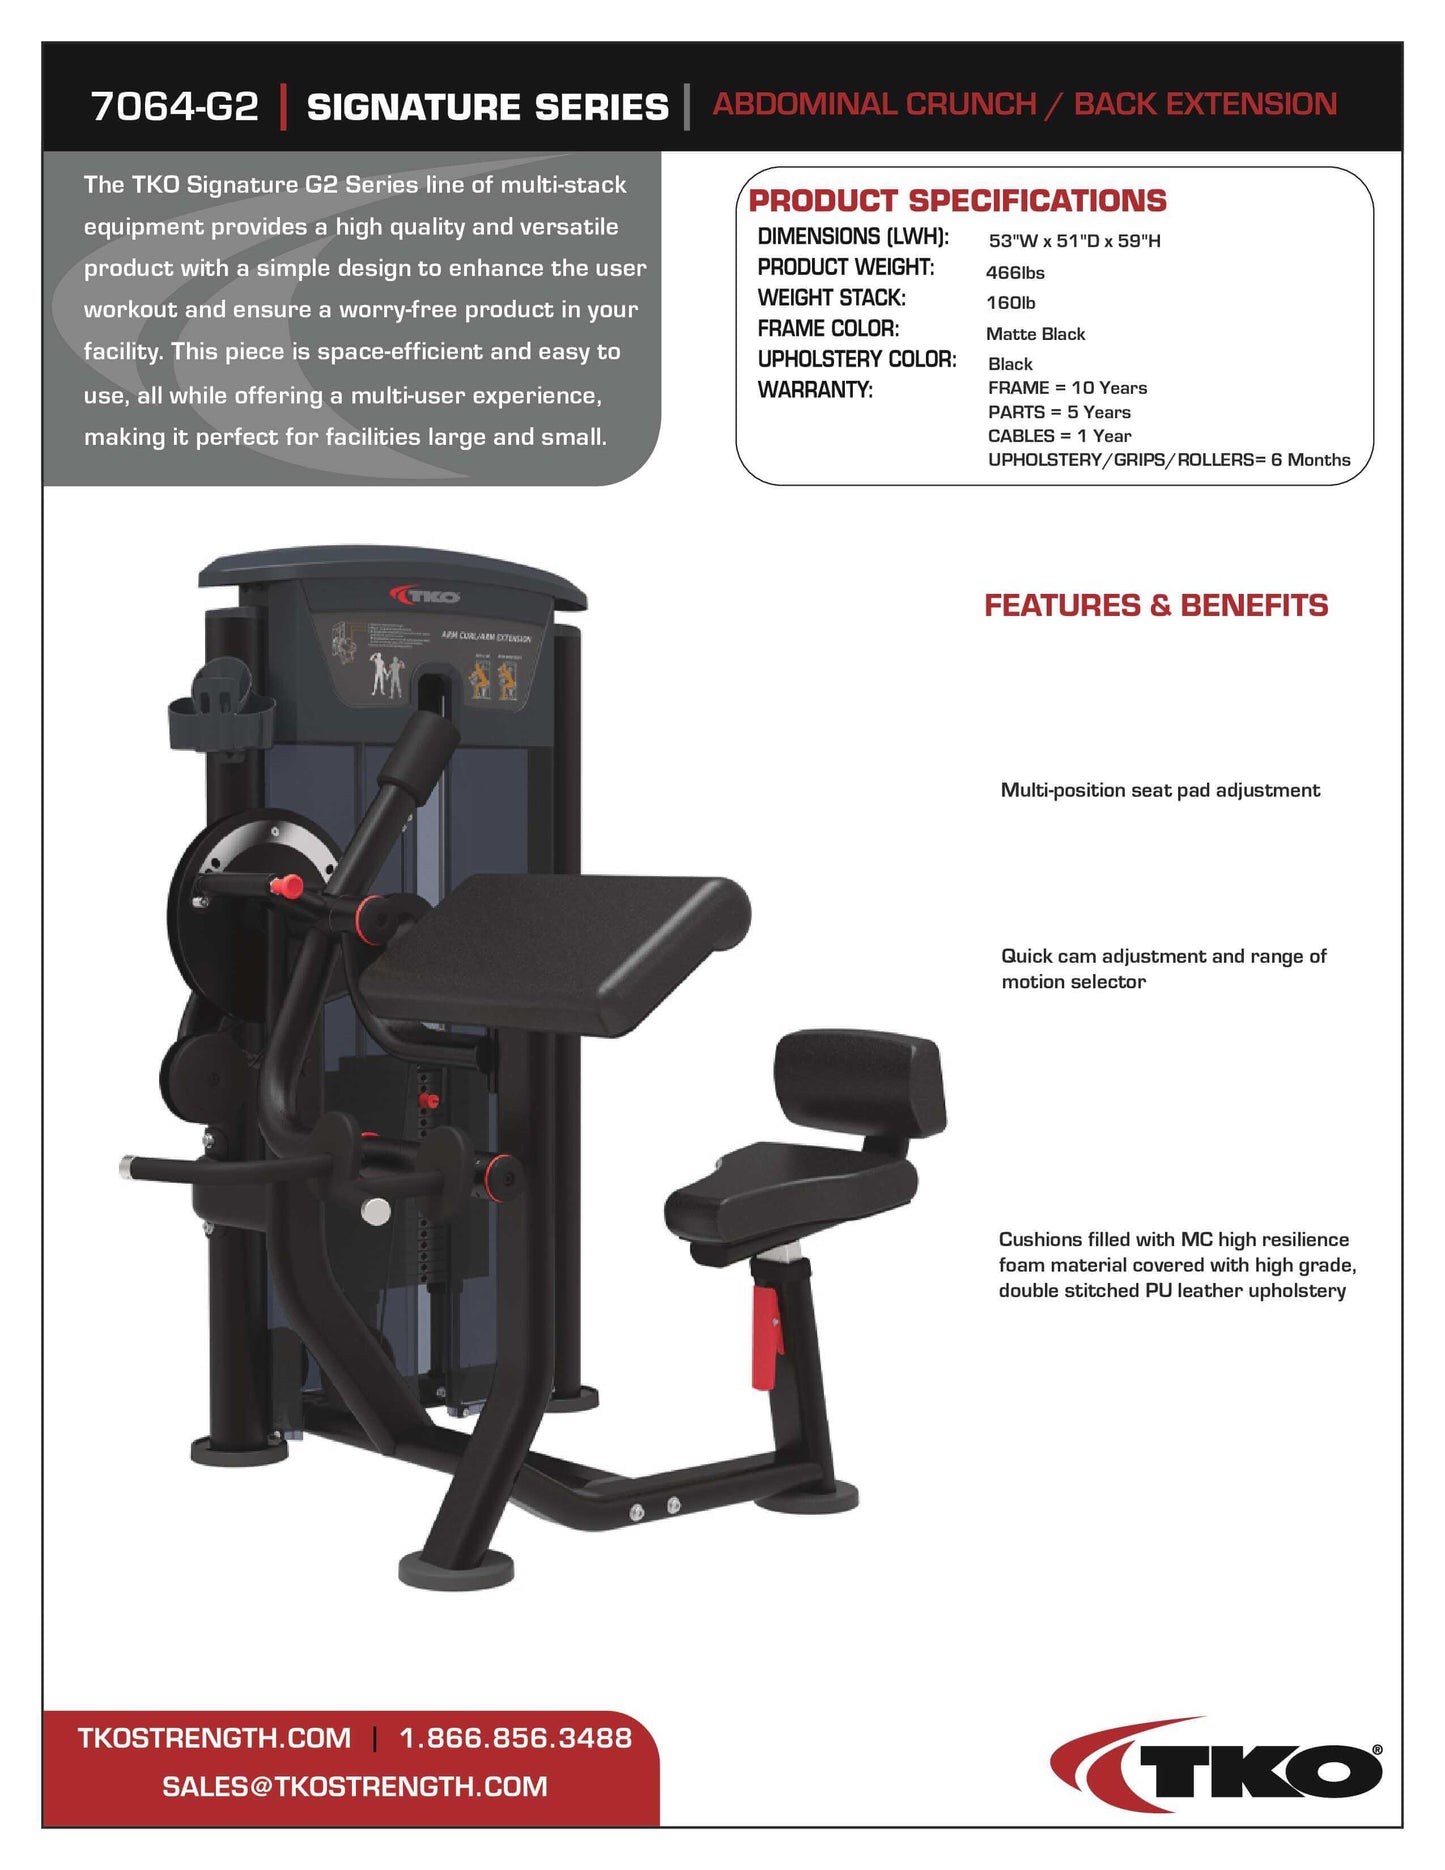 TKO Signature Abdominal Crunch / Back Extension Machine 160 lb Weight Stack